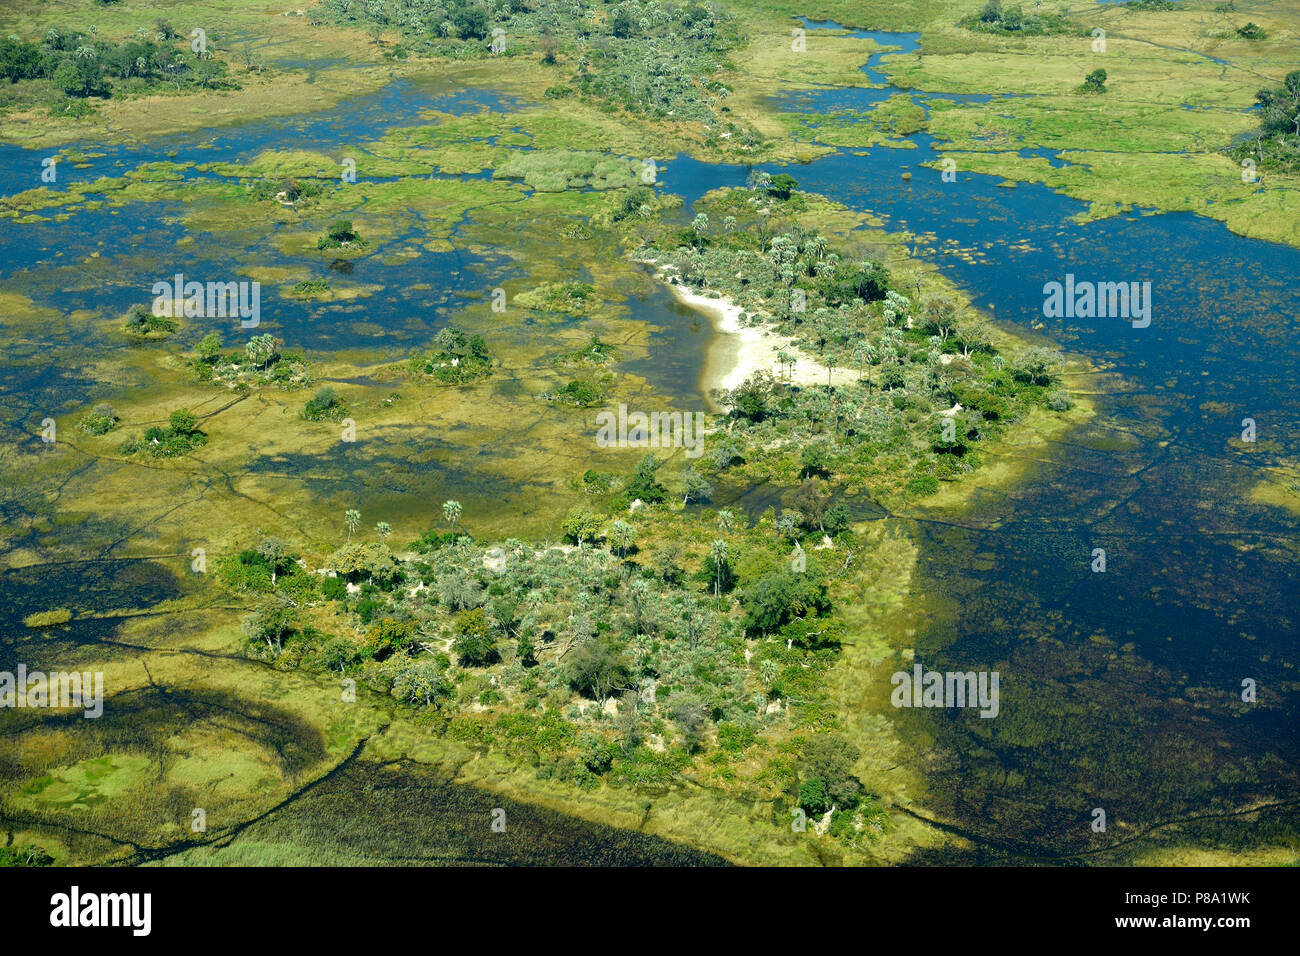 Los humedales, pantanos de agua dulce con canales e islas, vista aérea, Delta del Okavango, Moremi Game Reserve, Botswana Foto de stock